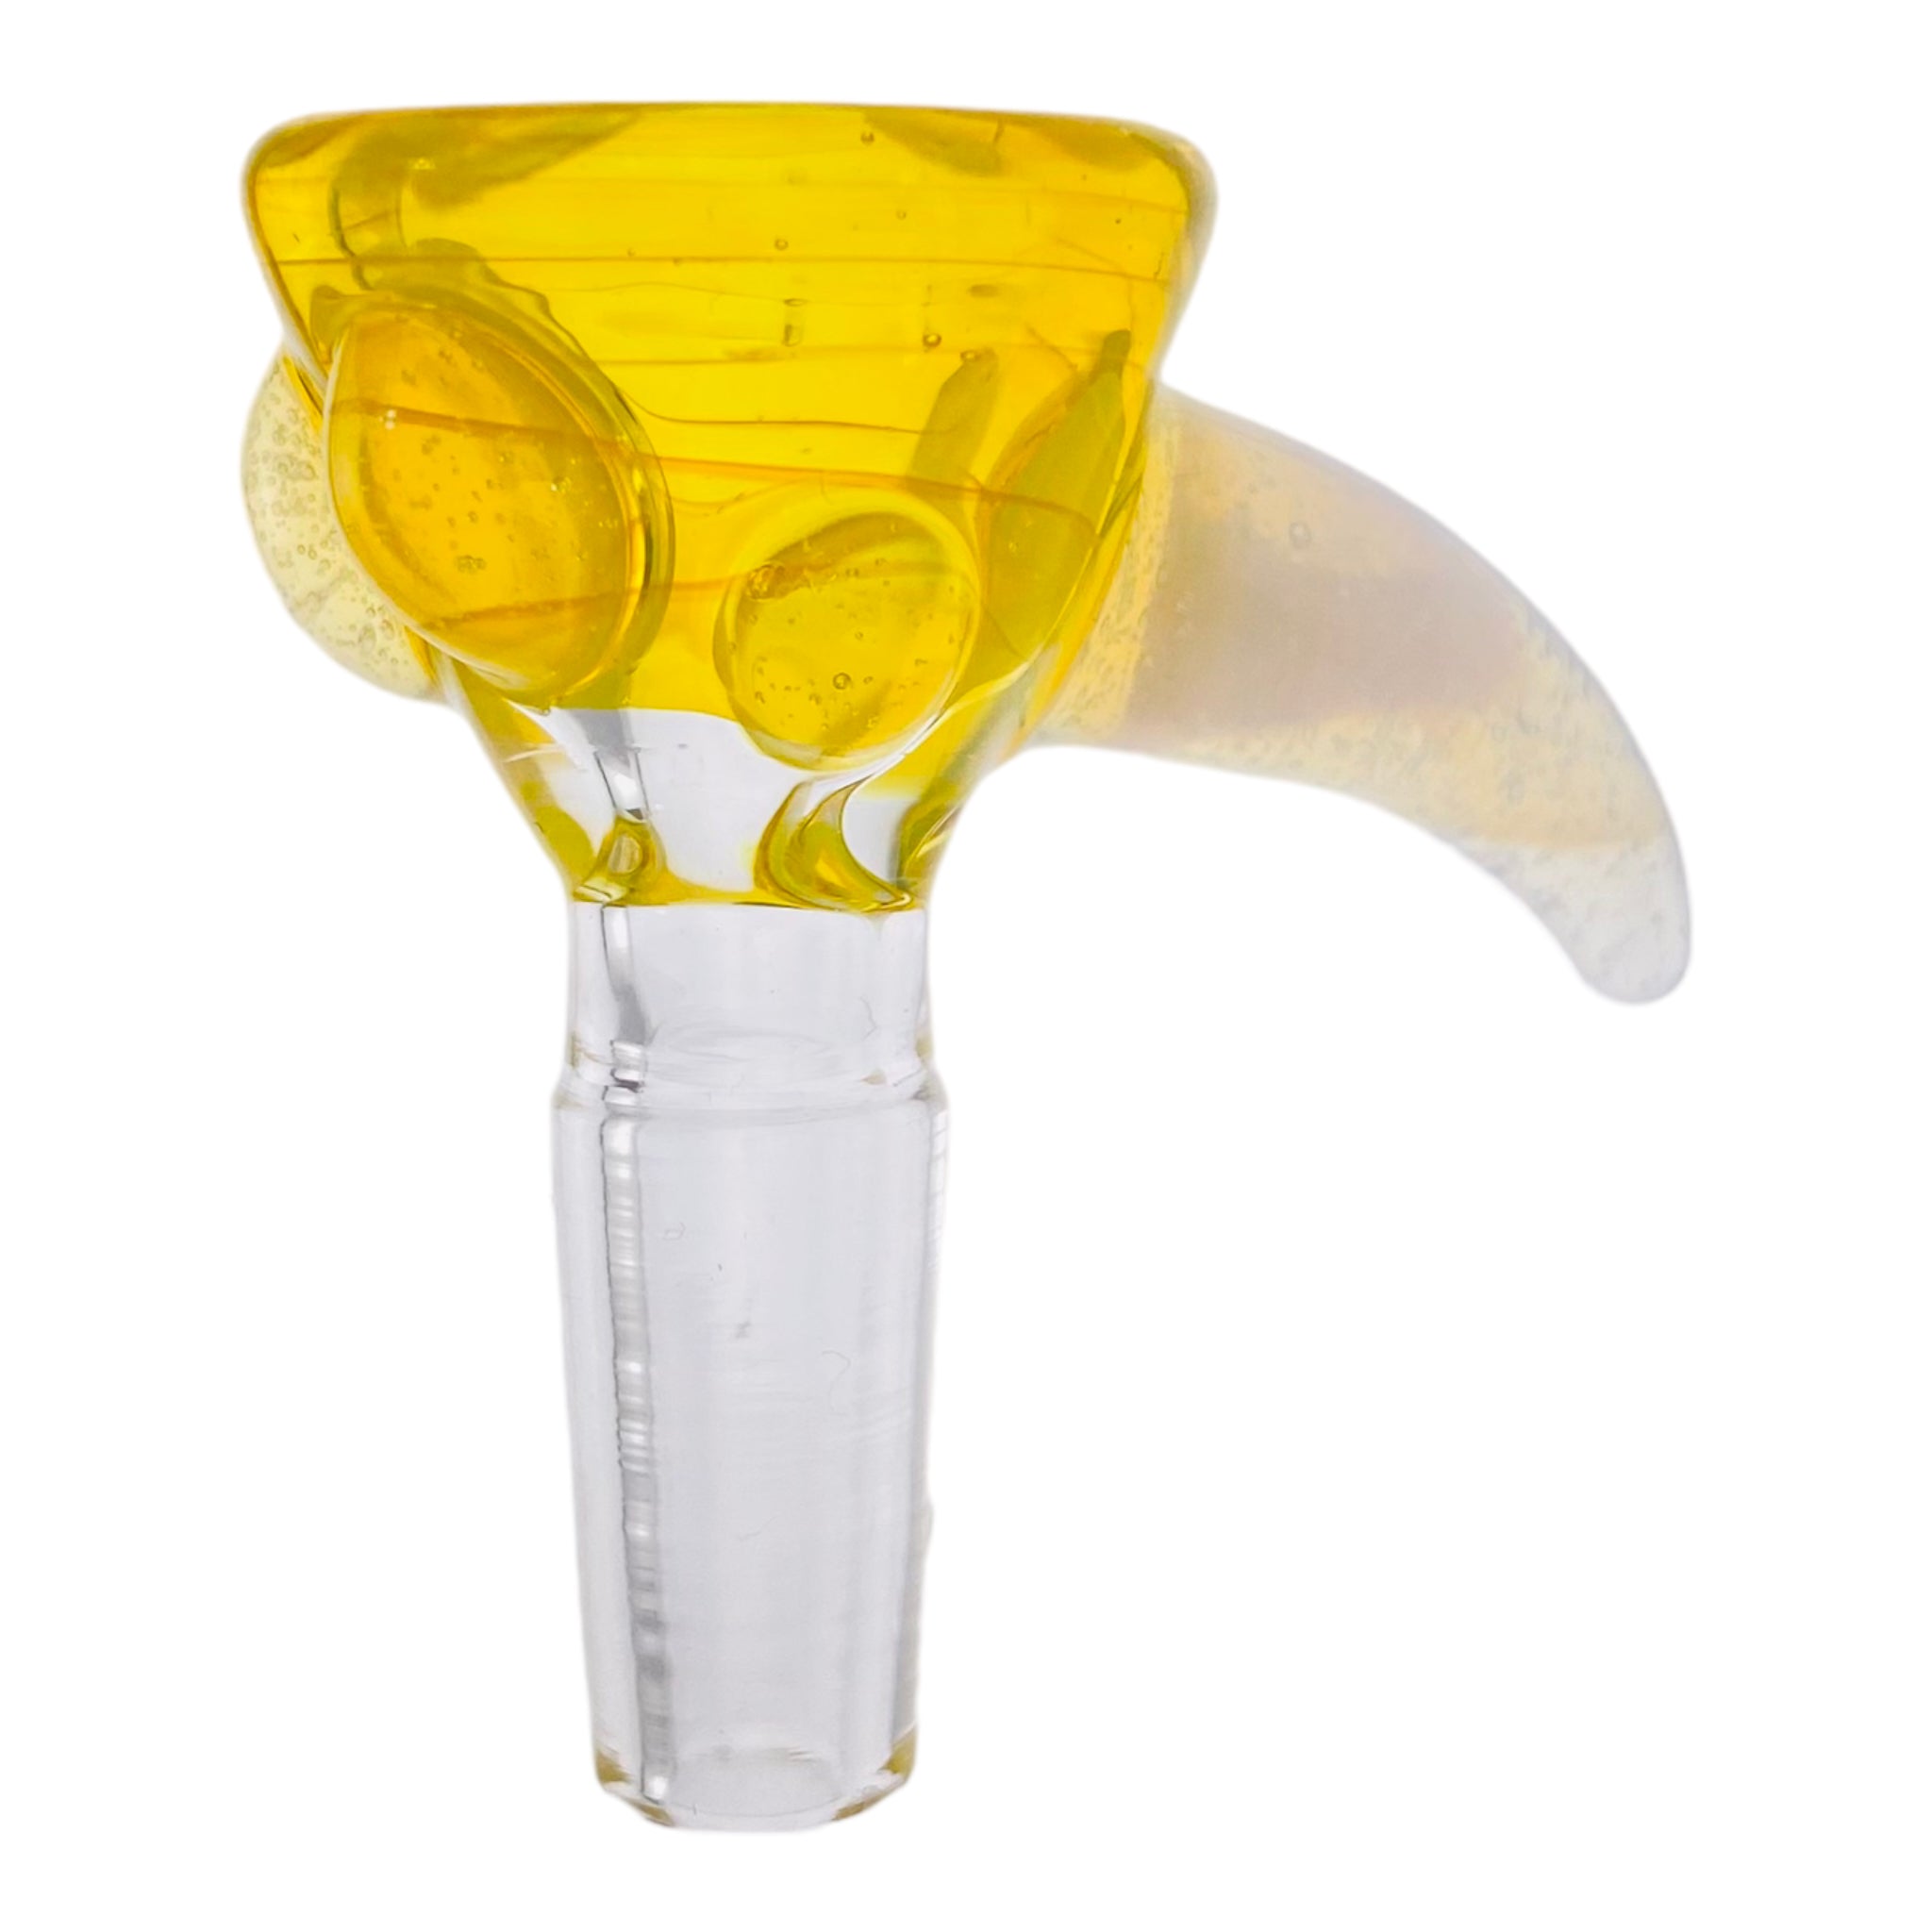 Arko Glass - 10mm Flower Bowl - Alientech With Golden Yellow Handle & Dots